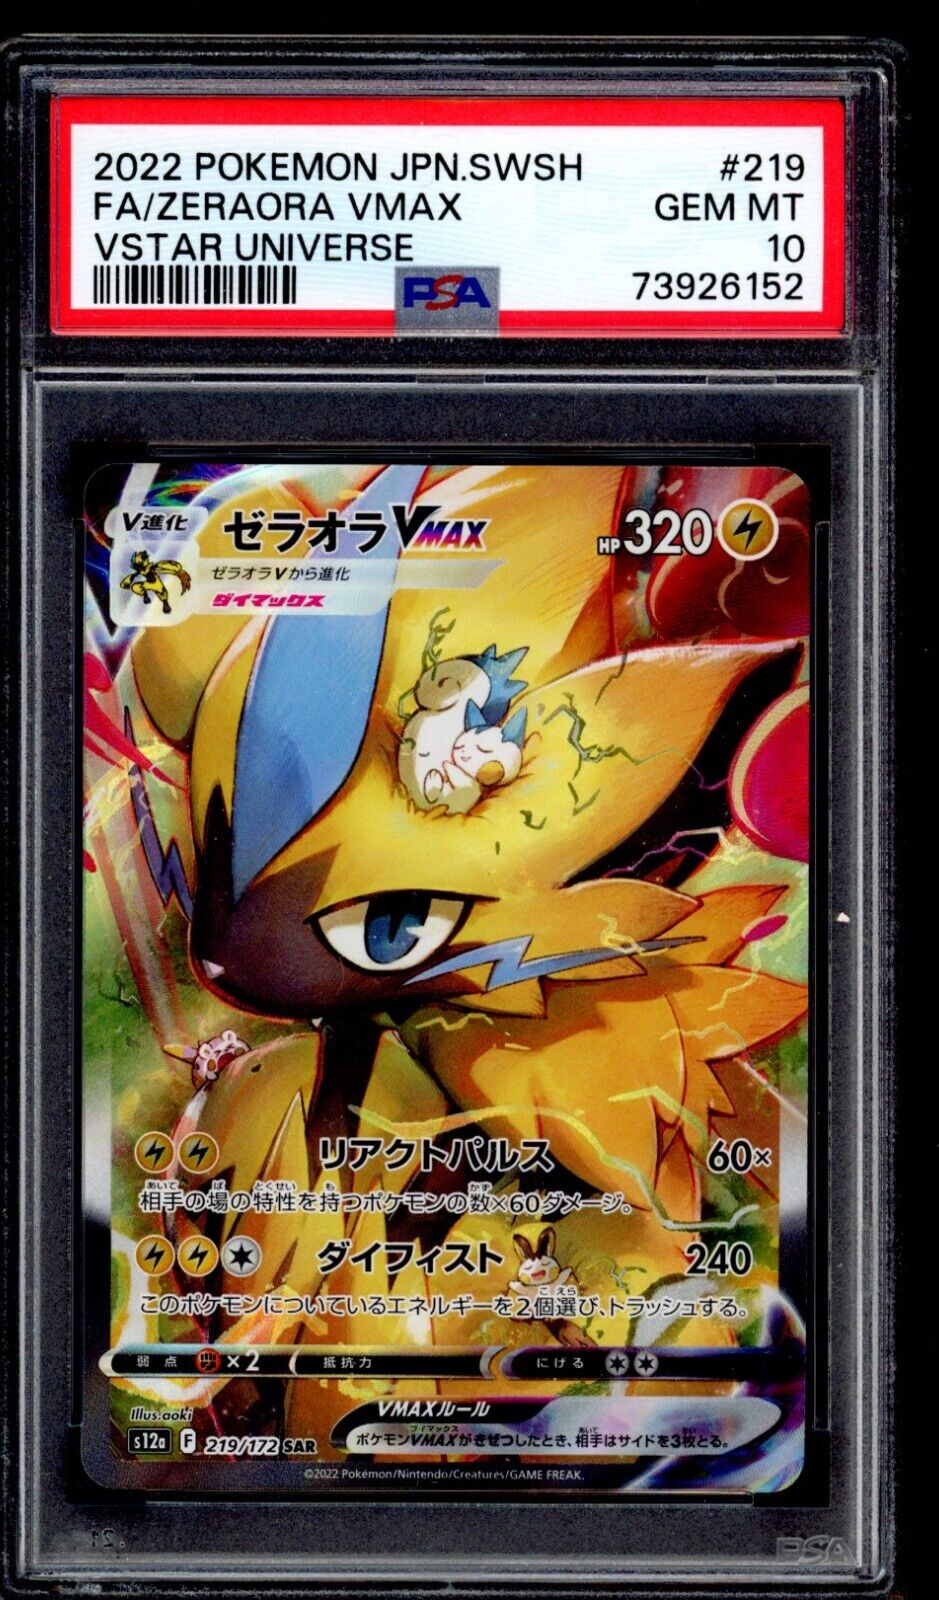 PSA 10 Zeraora 2022 Pokemon Card s12a 219/172 Vstar Universe